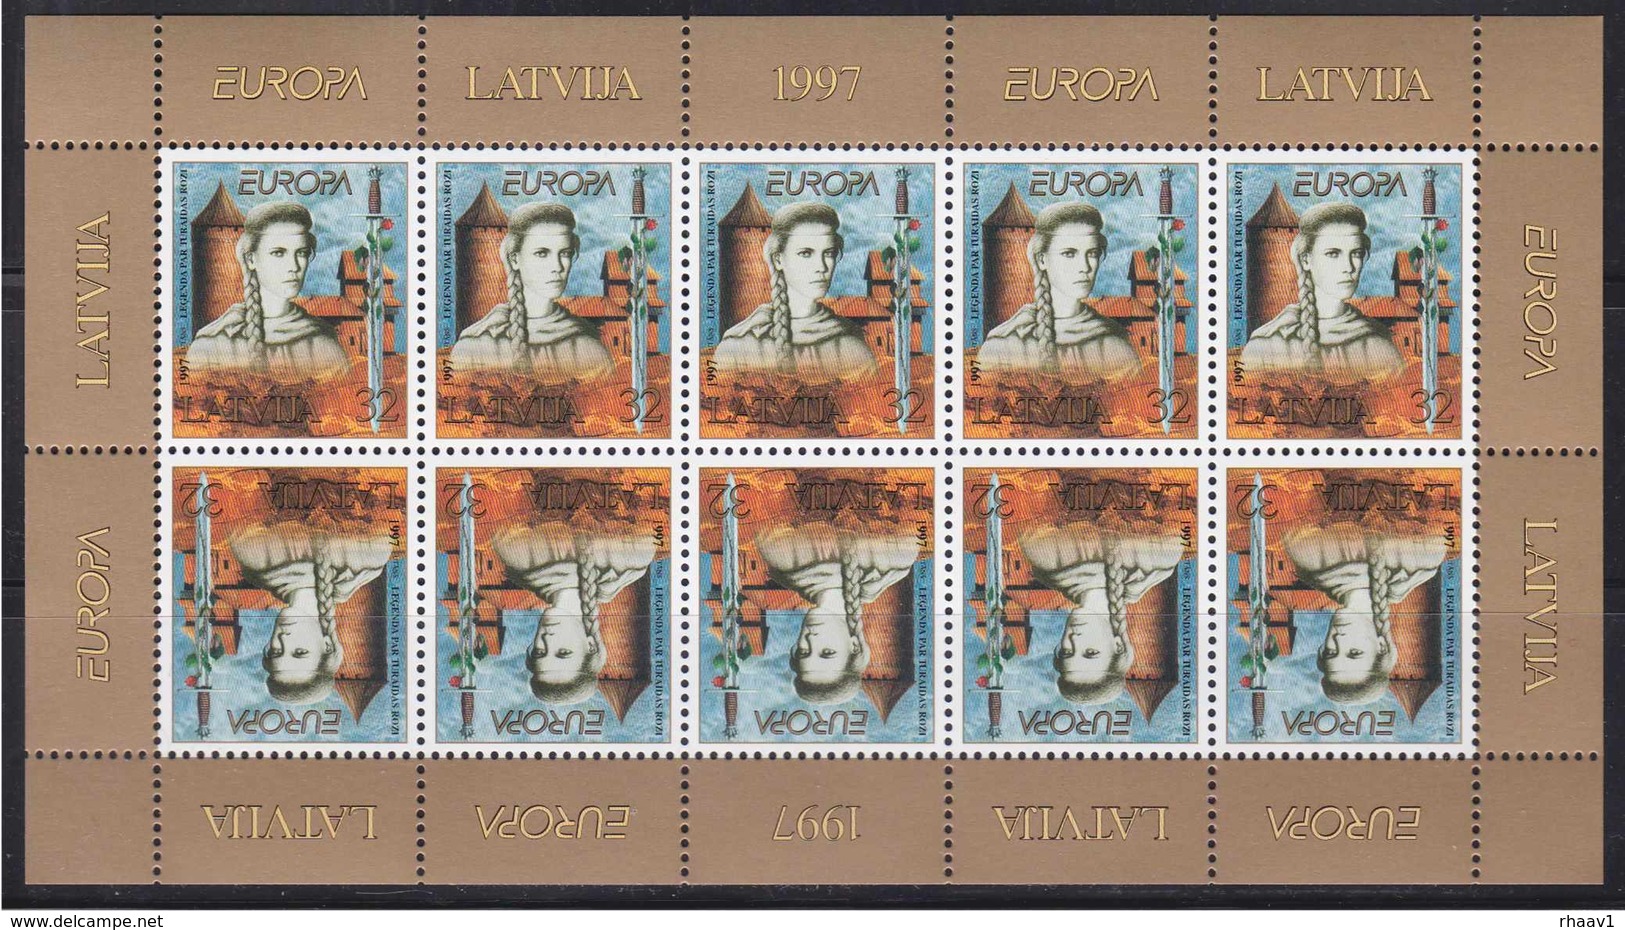 Latvia Mint Stamps Minisheet - Europa 1997 - 1997